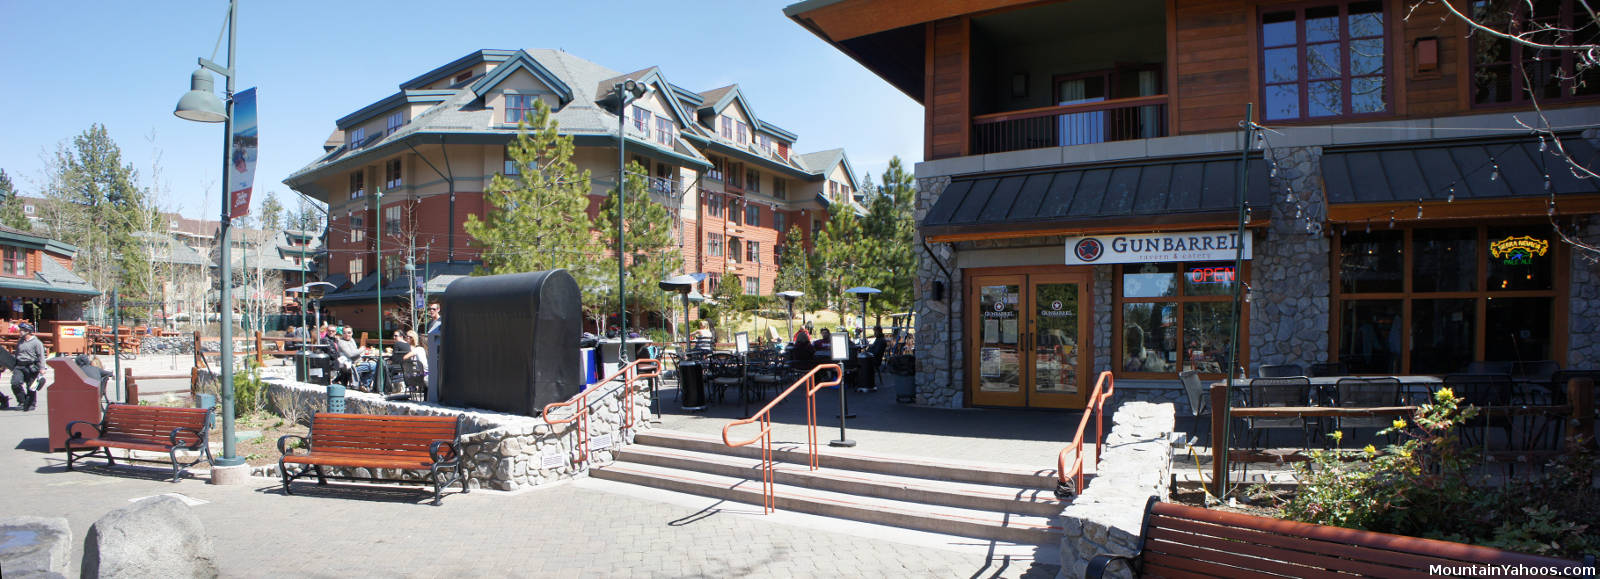 Gunbarrel Tavern at the village at Heavenly Ski Resort at Lake Tahoe California